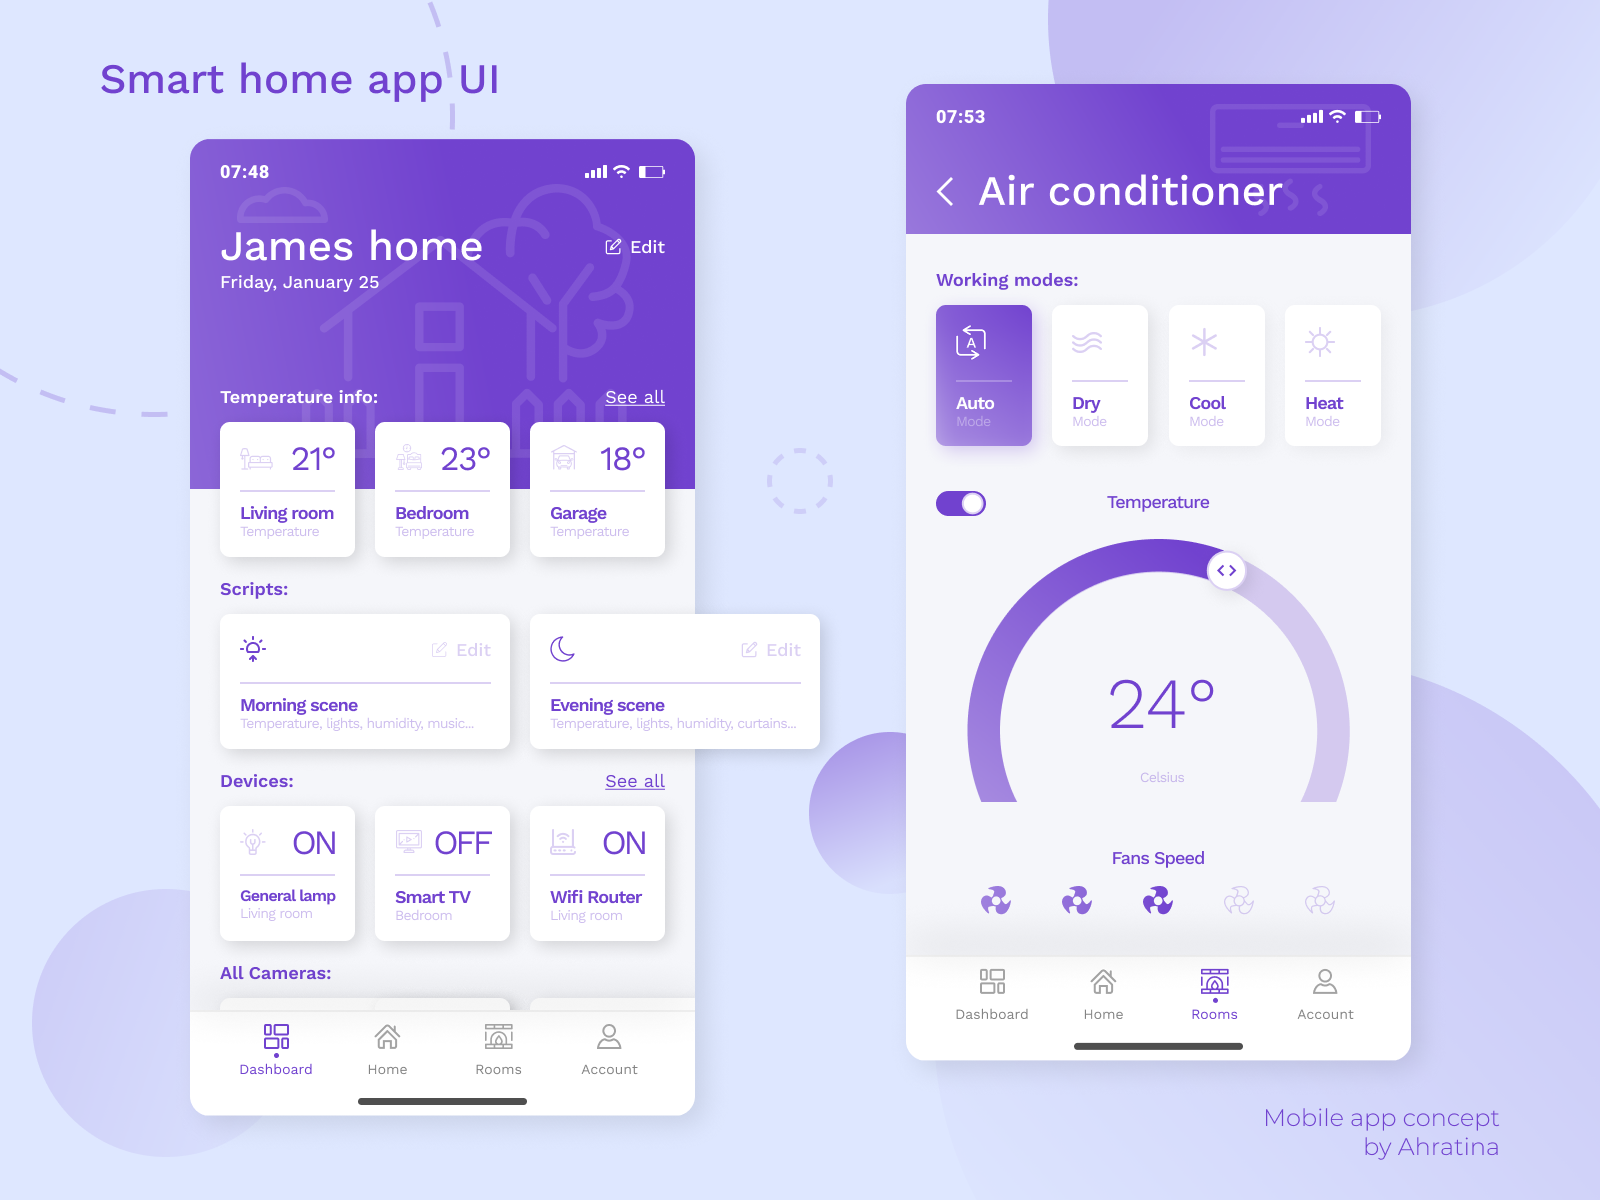 Smart home app UI by Dmitry Ahratina on Dribbble